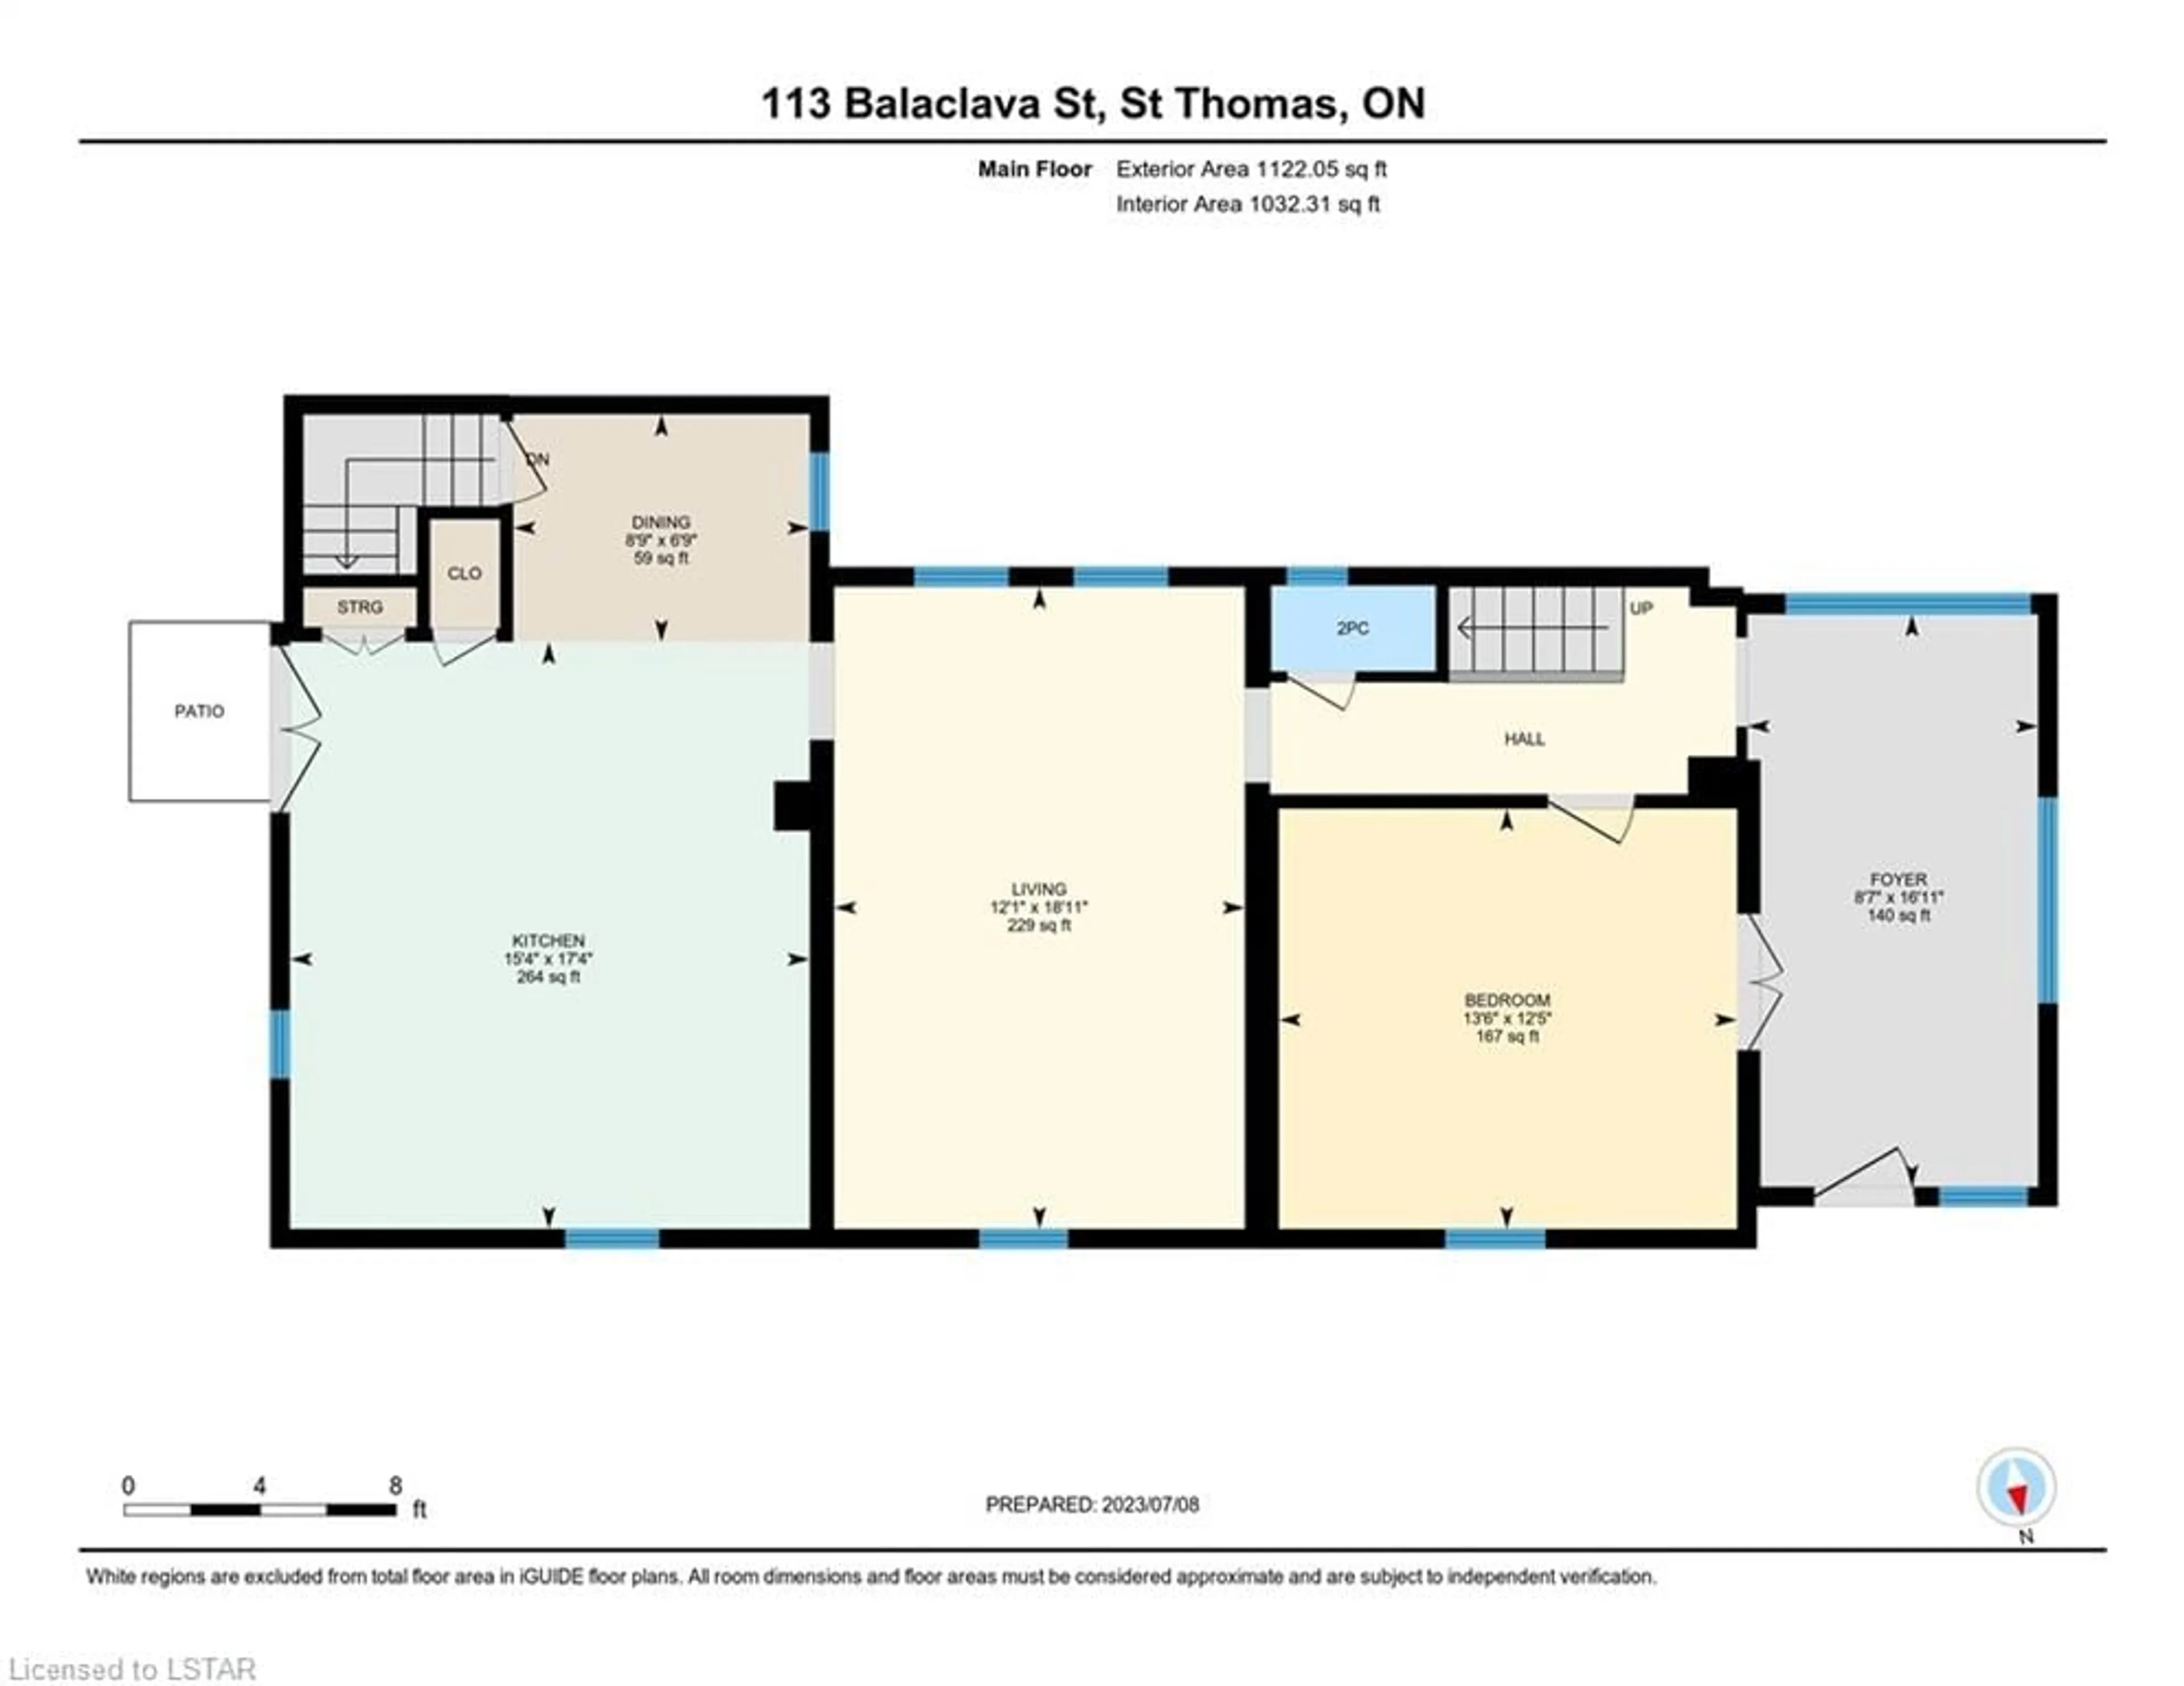 Floor plan for 113 Balaclava St, St. Thomas Ontario N5P 3C8